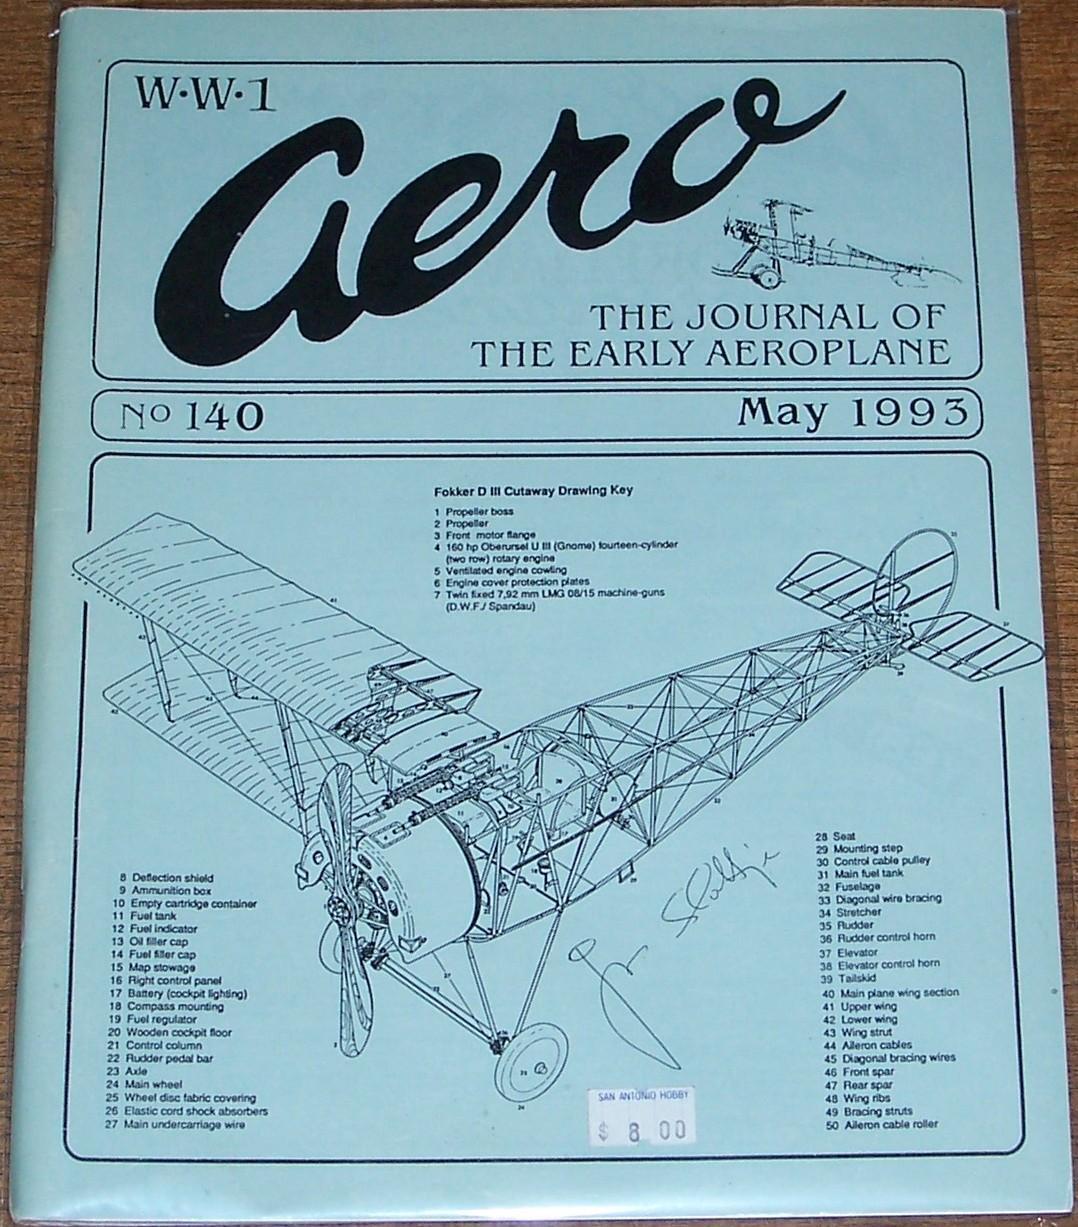 Leonard E Opdycke / WWI AERO THE JOURNAL OF THE EARLY AEROPLANE NO 140 MAY 1993